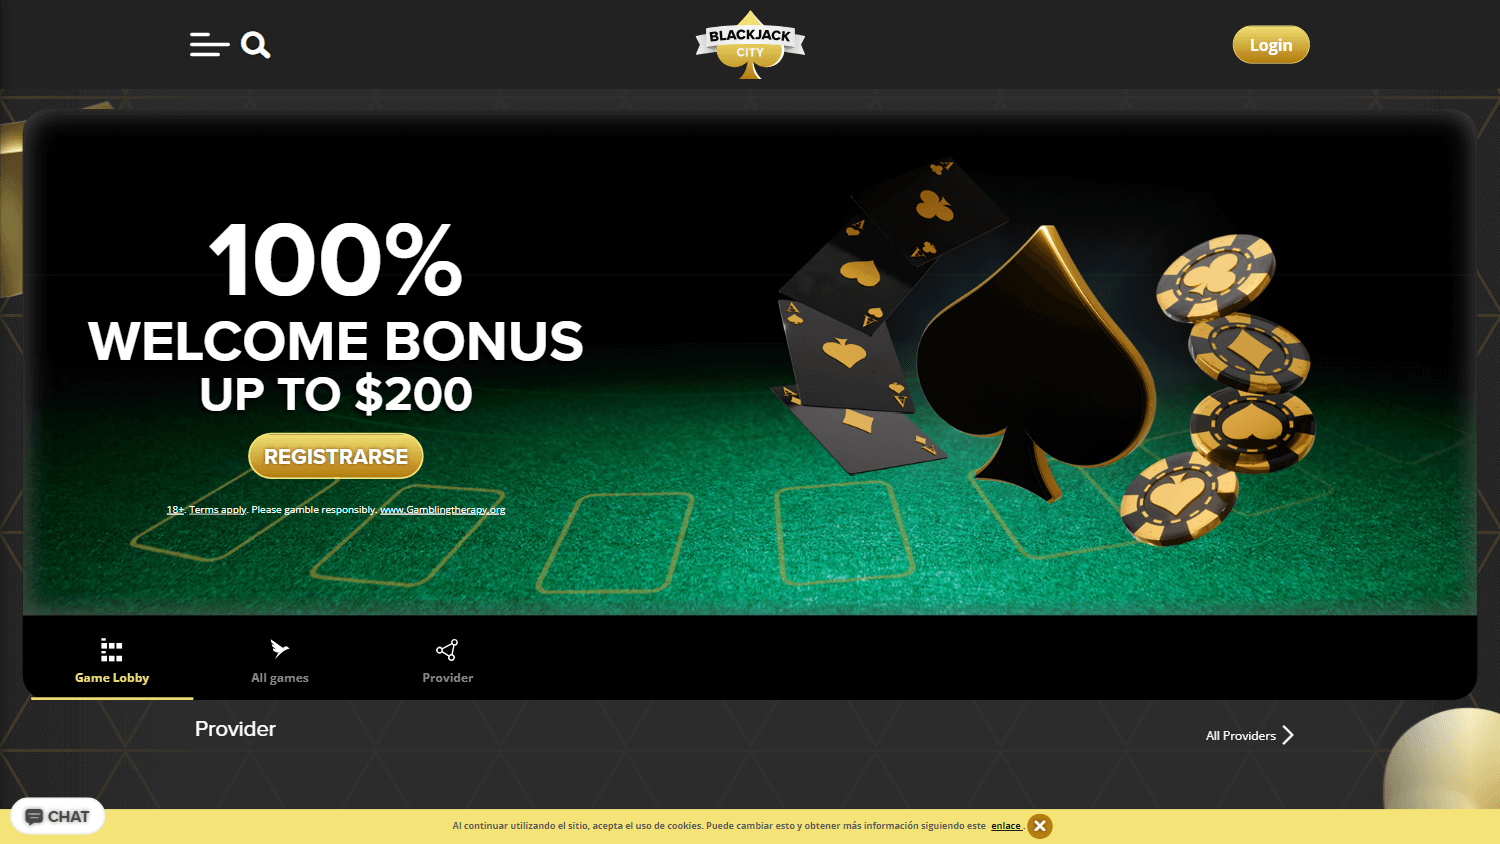 blackjack_city_casino_homepage_desktop